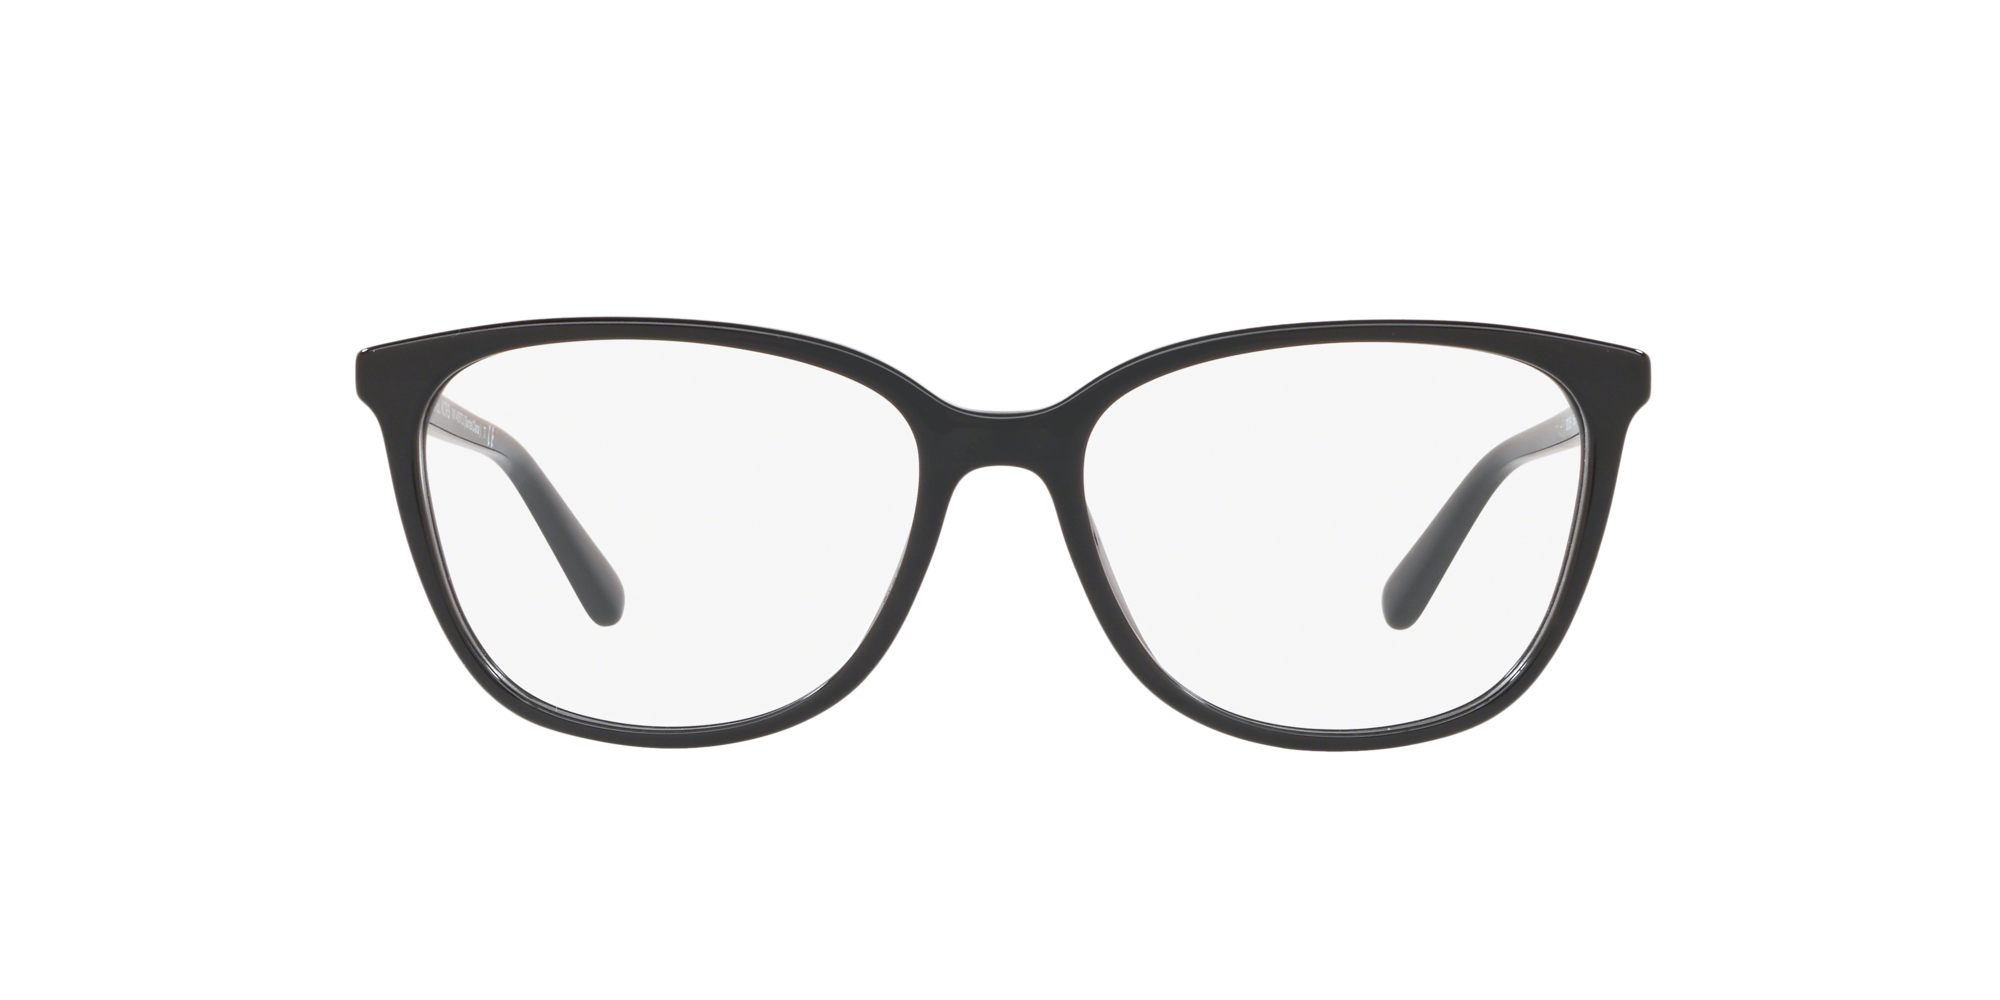 Michael Kors Glasses Santa Clara MK 4067U  Transparent Frames  Vision  Express